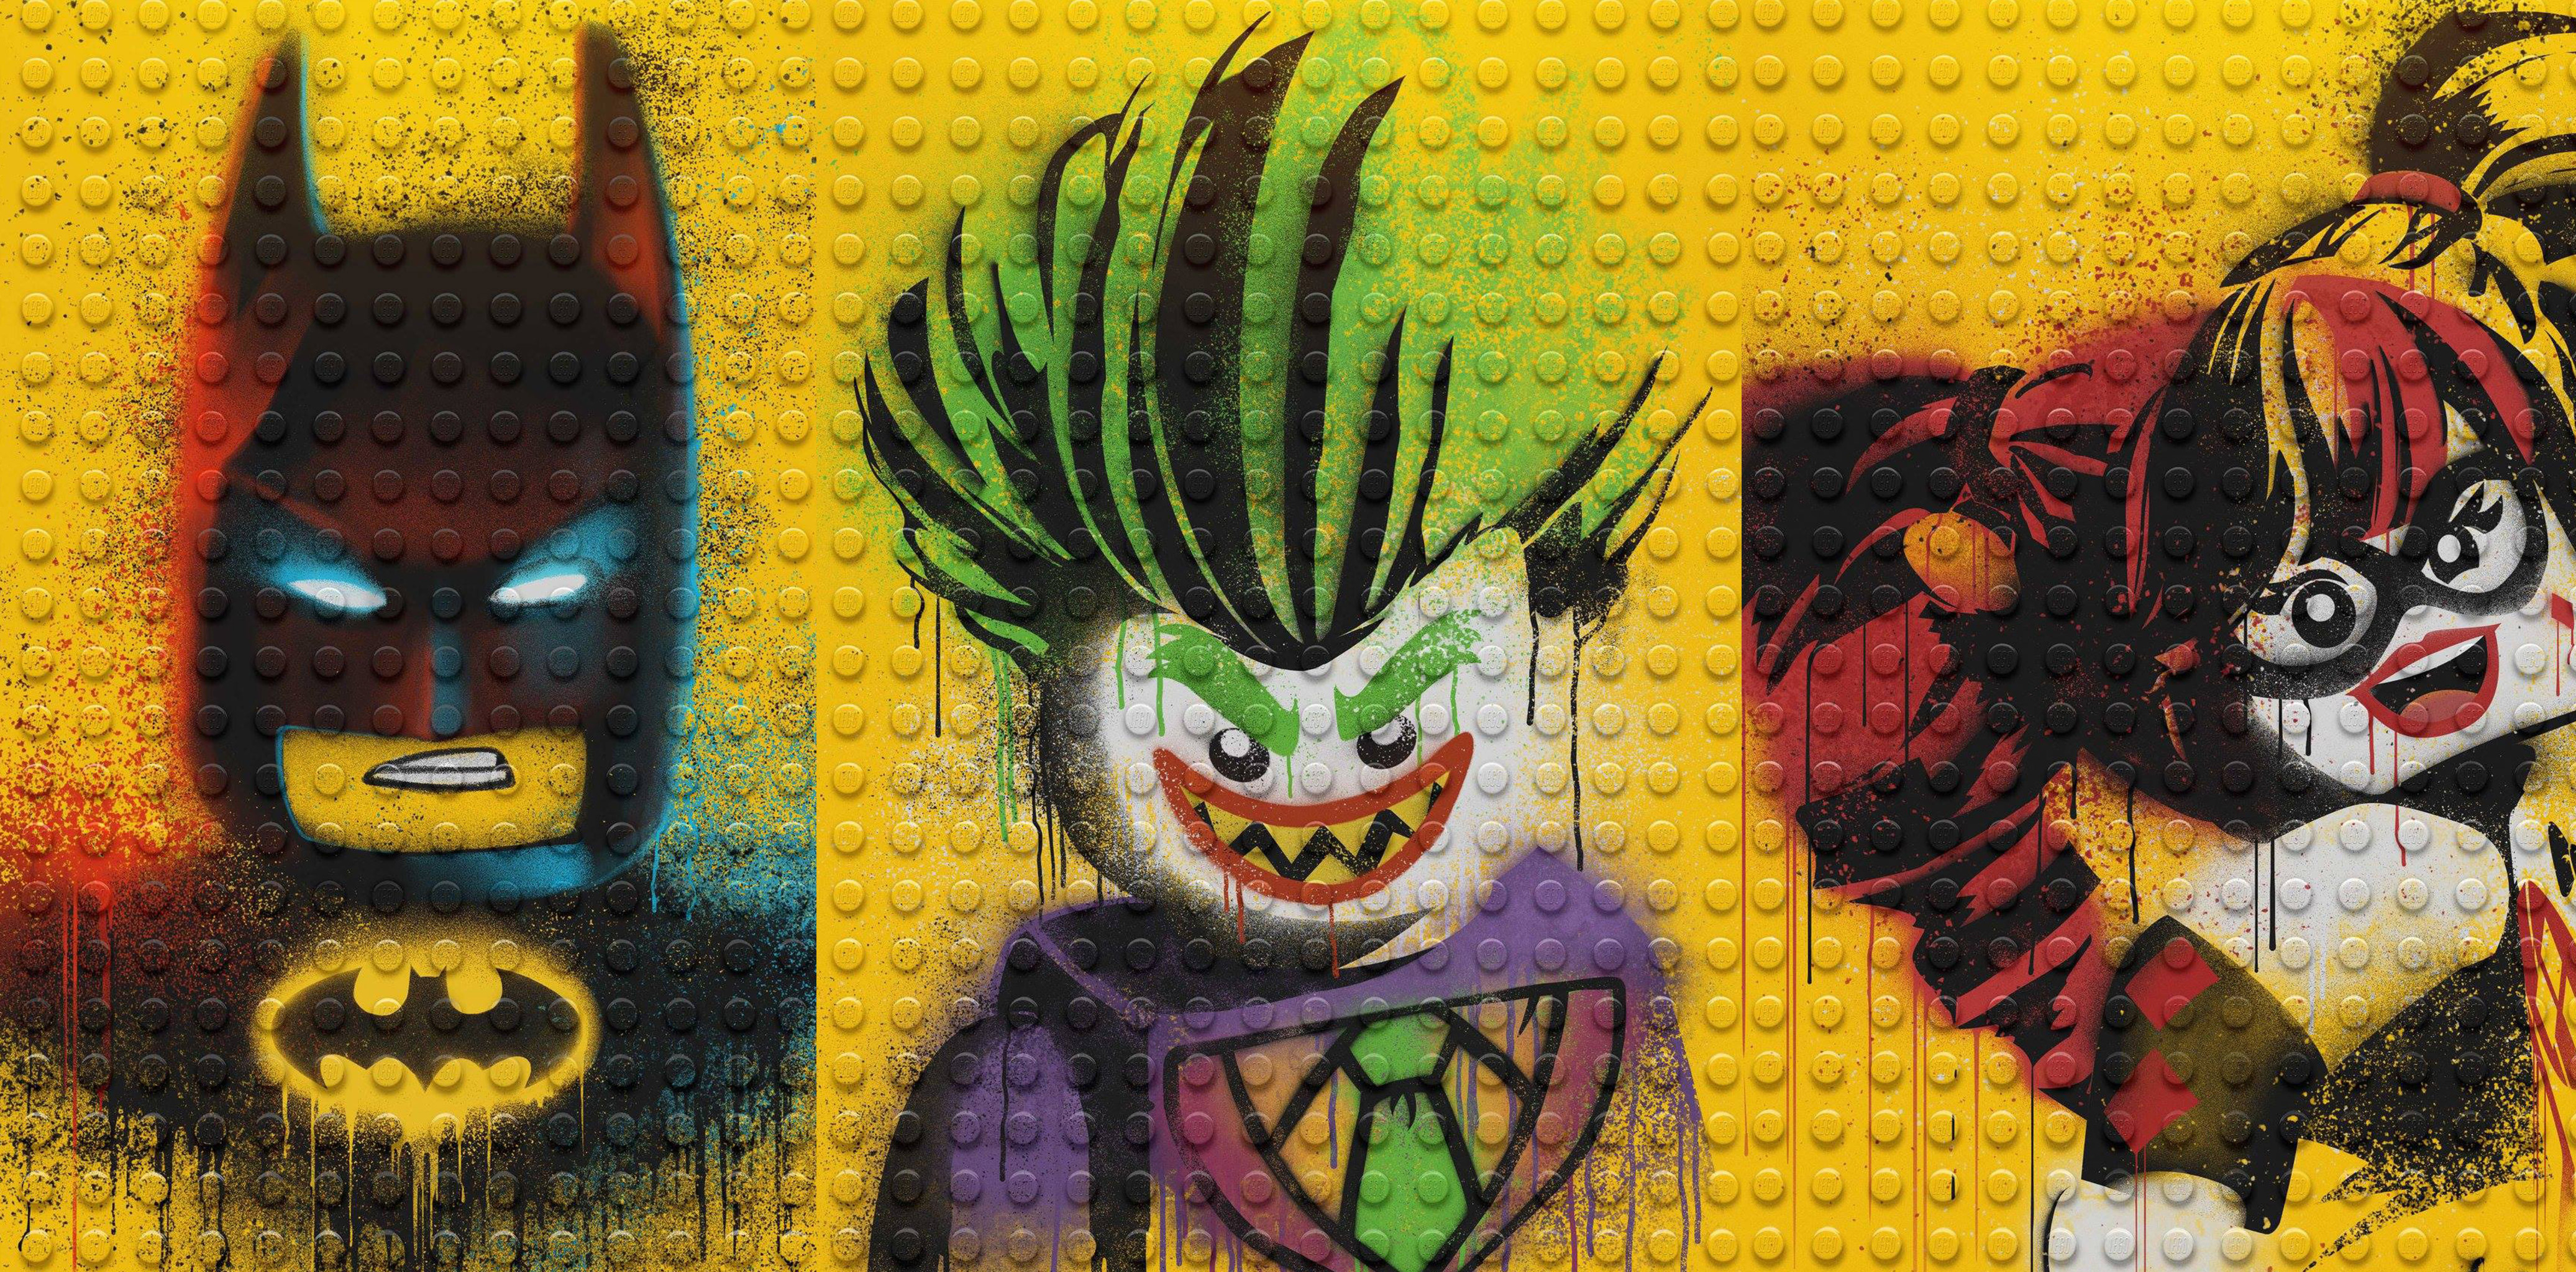 Lego Batman Joker And Harley Quinn - HD Wallpaper 